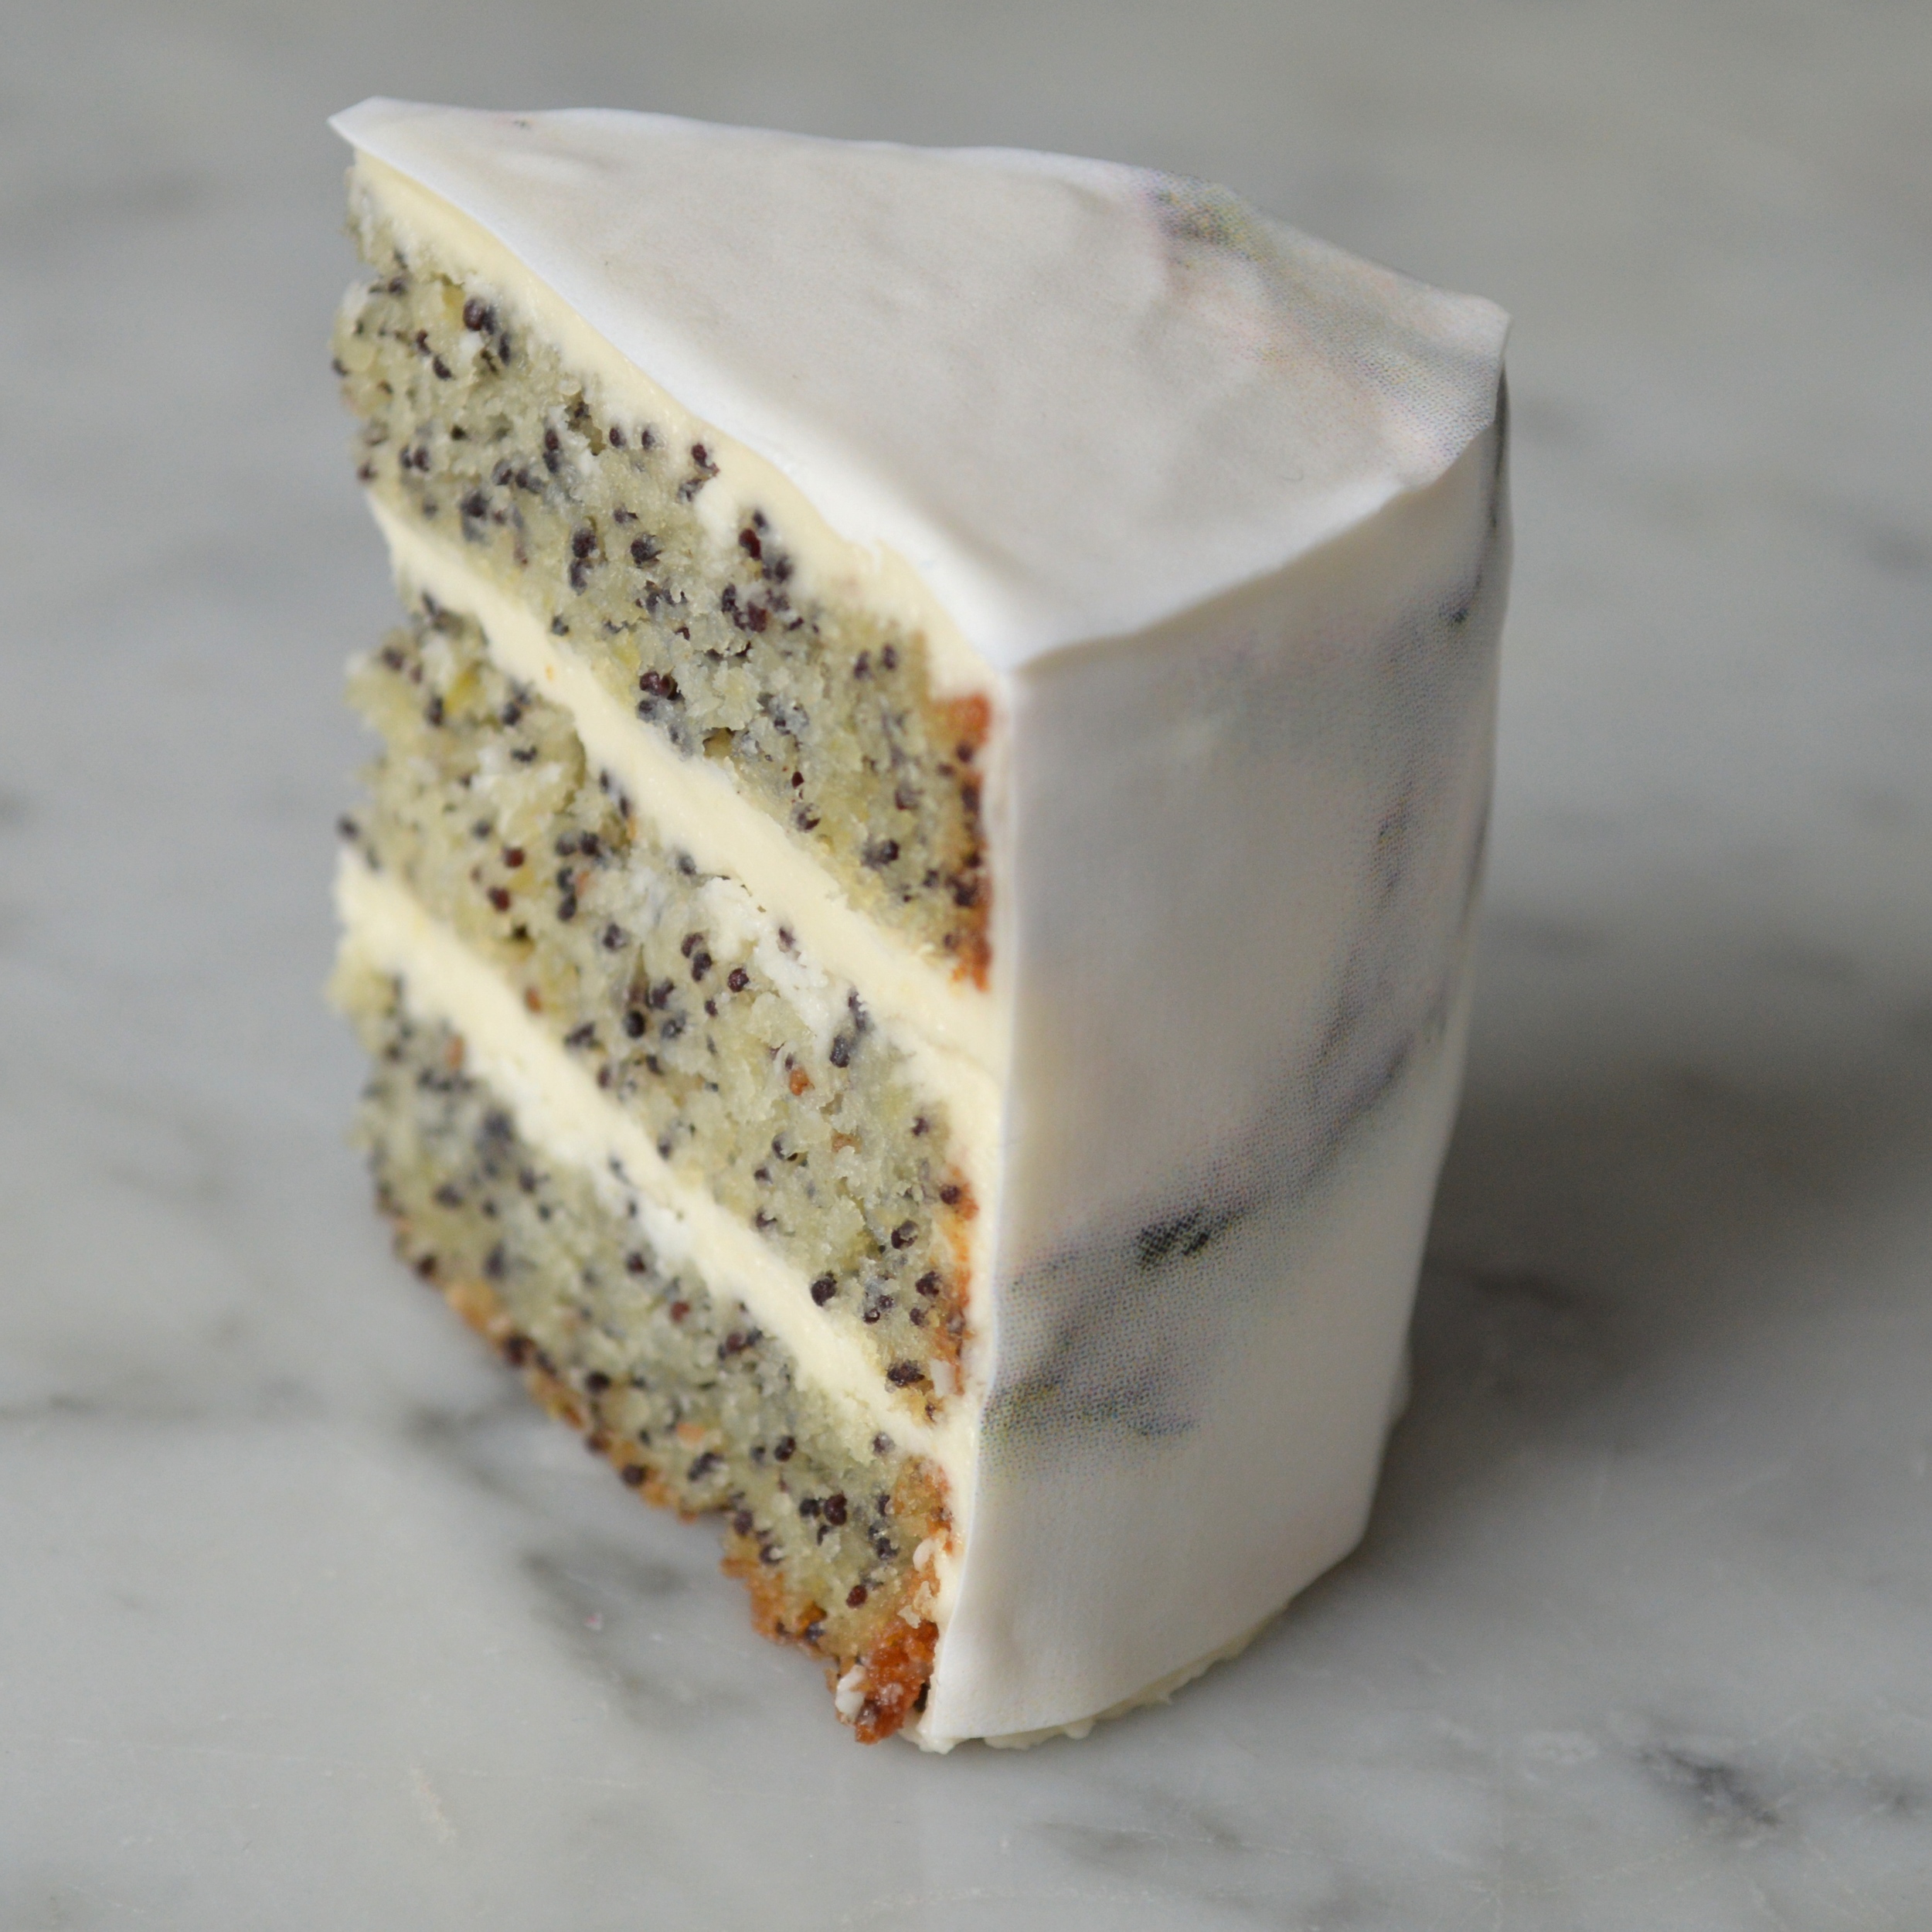 Lemony Poppyseed Cake with  Carrara Chefanie Sheets